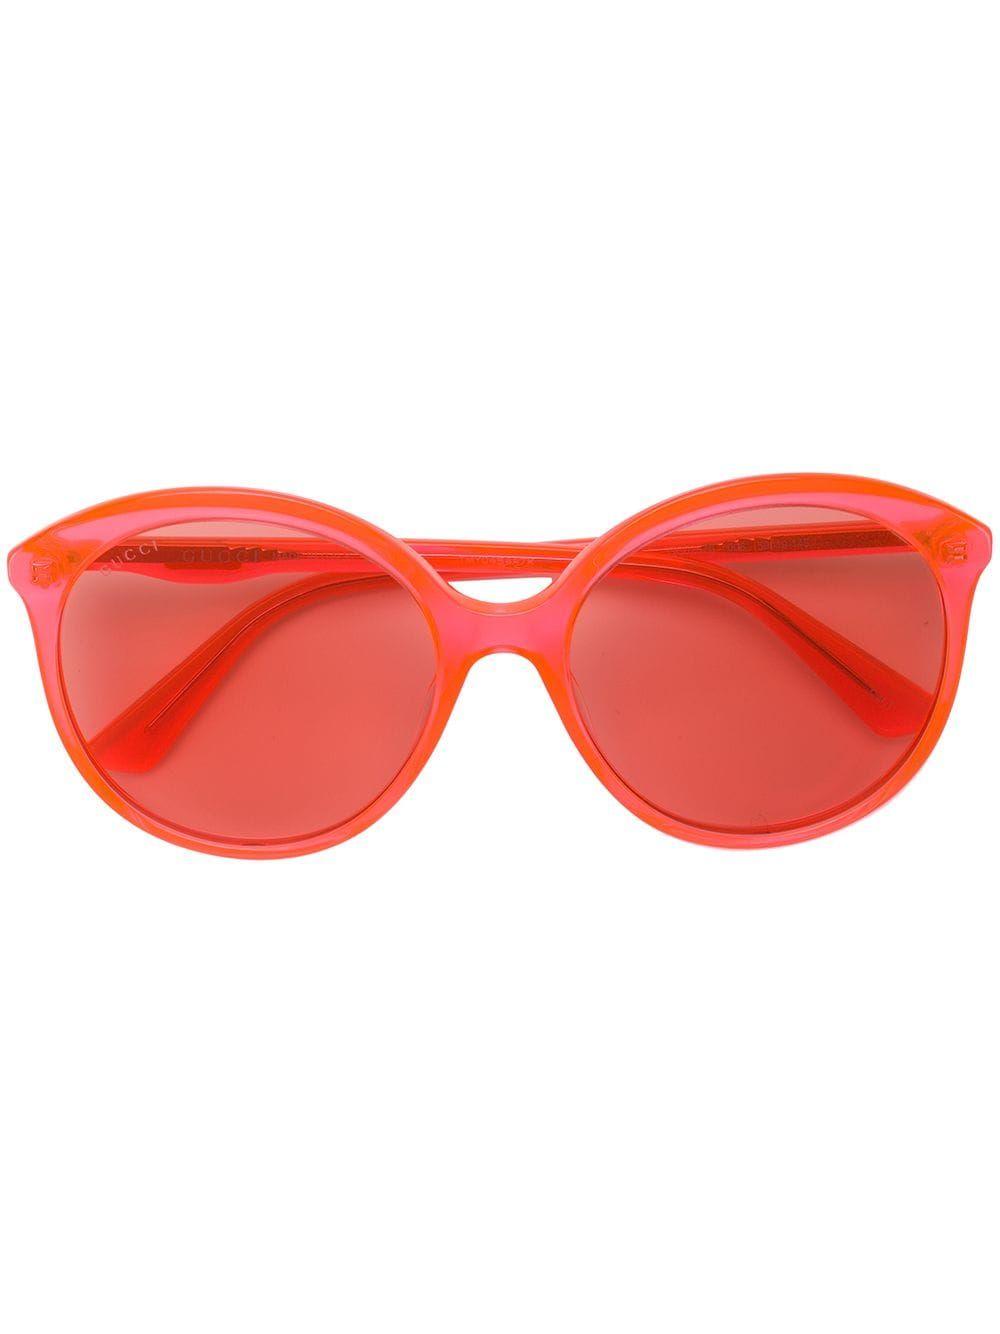 Gucci Orange Acetate Sunglasses - Lyst